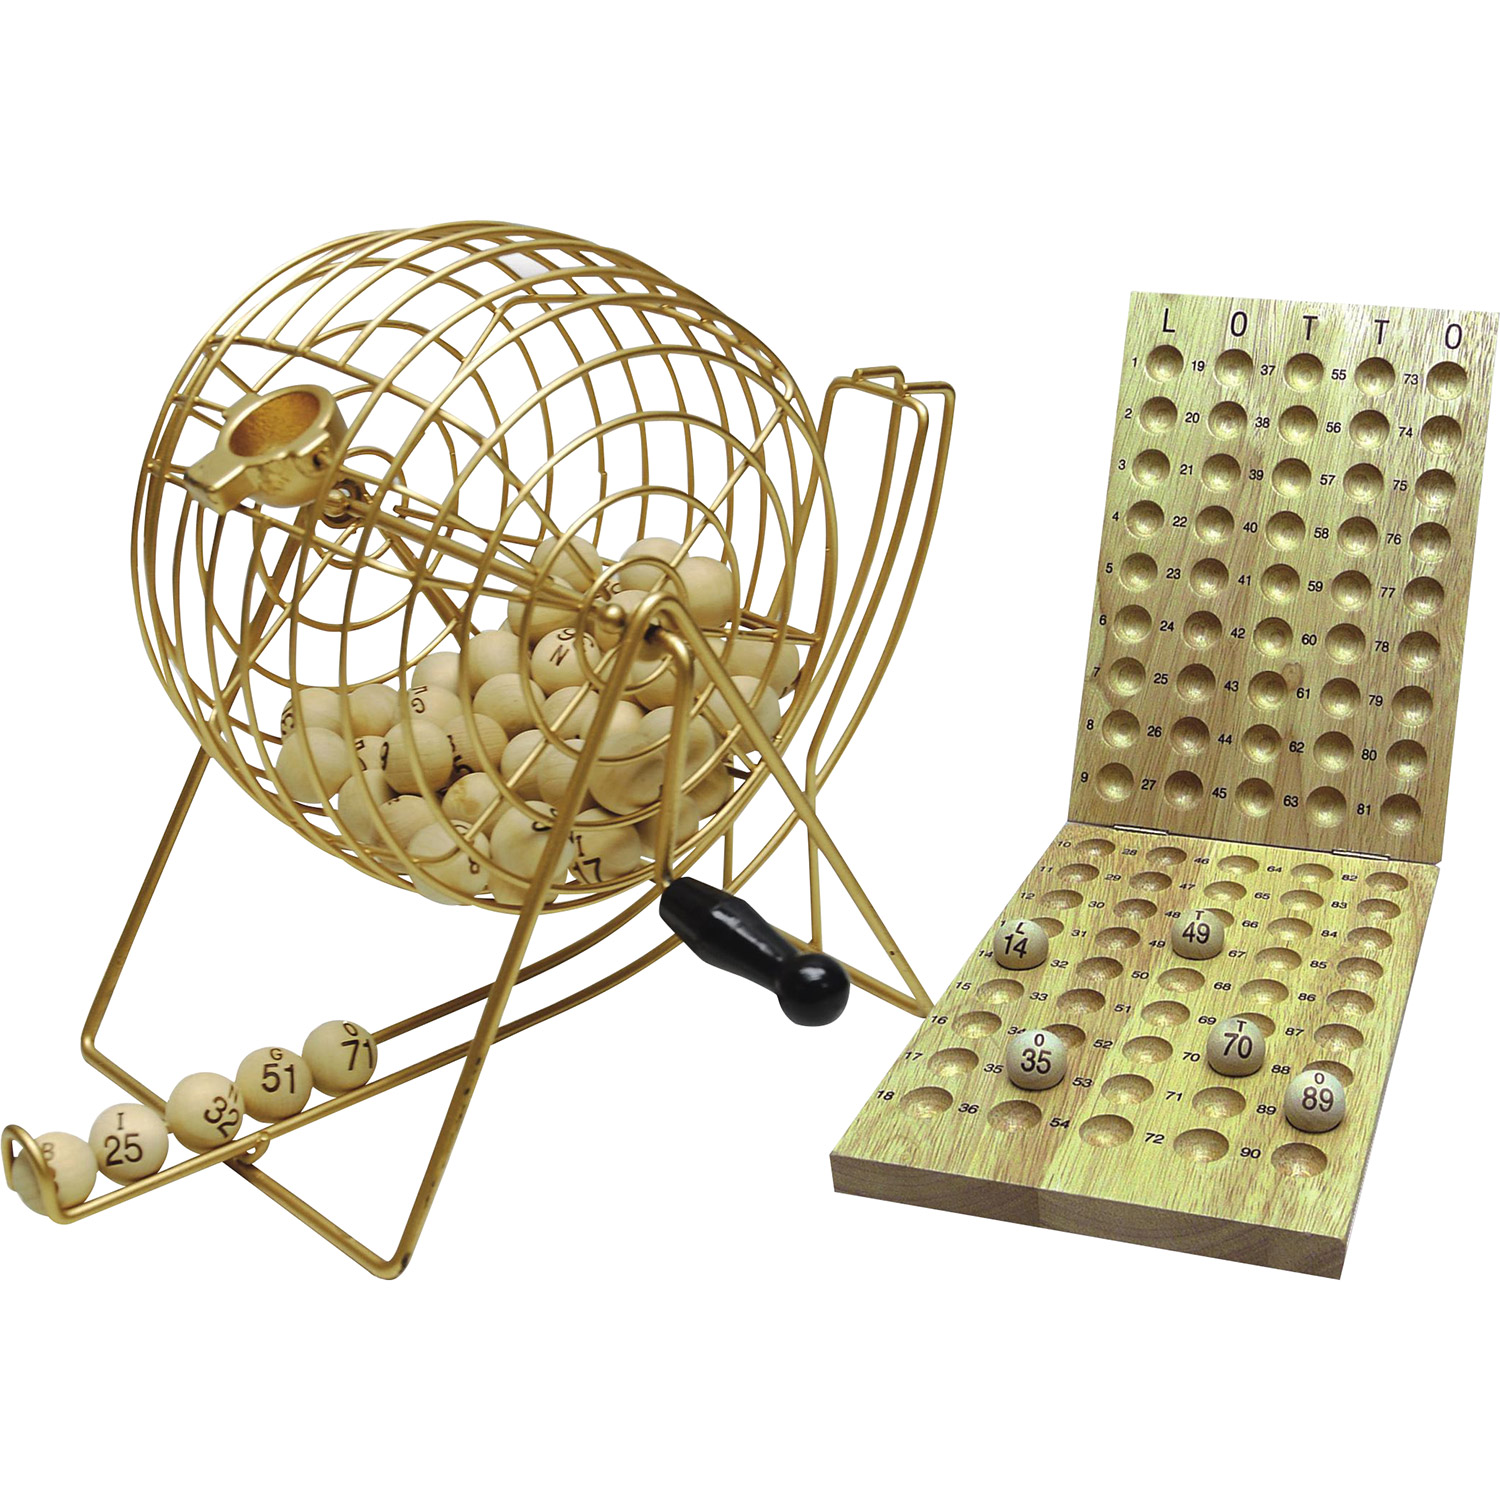 Lotto-Kien mill with accessories